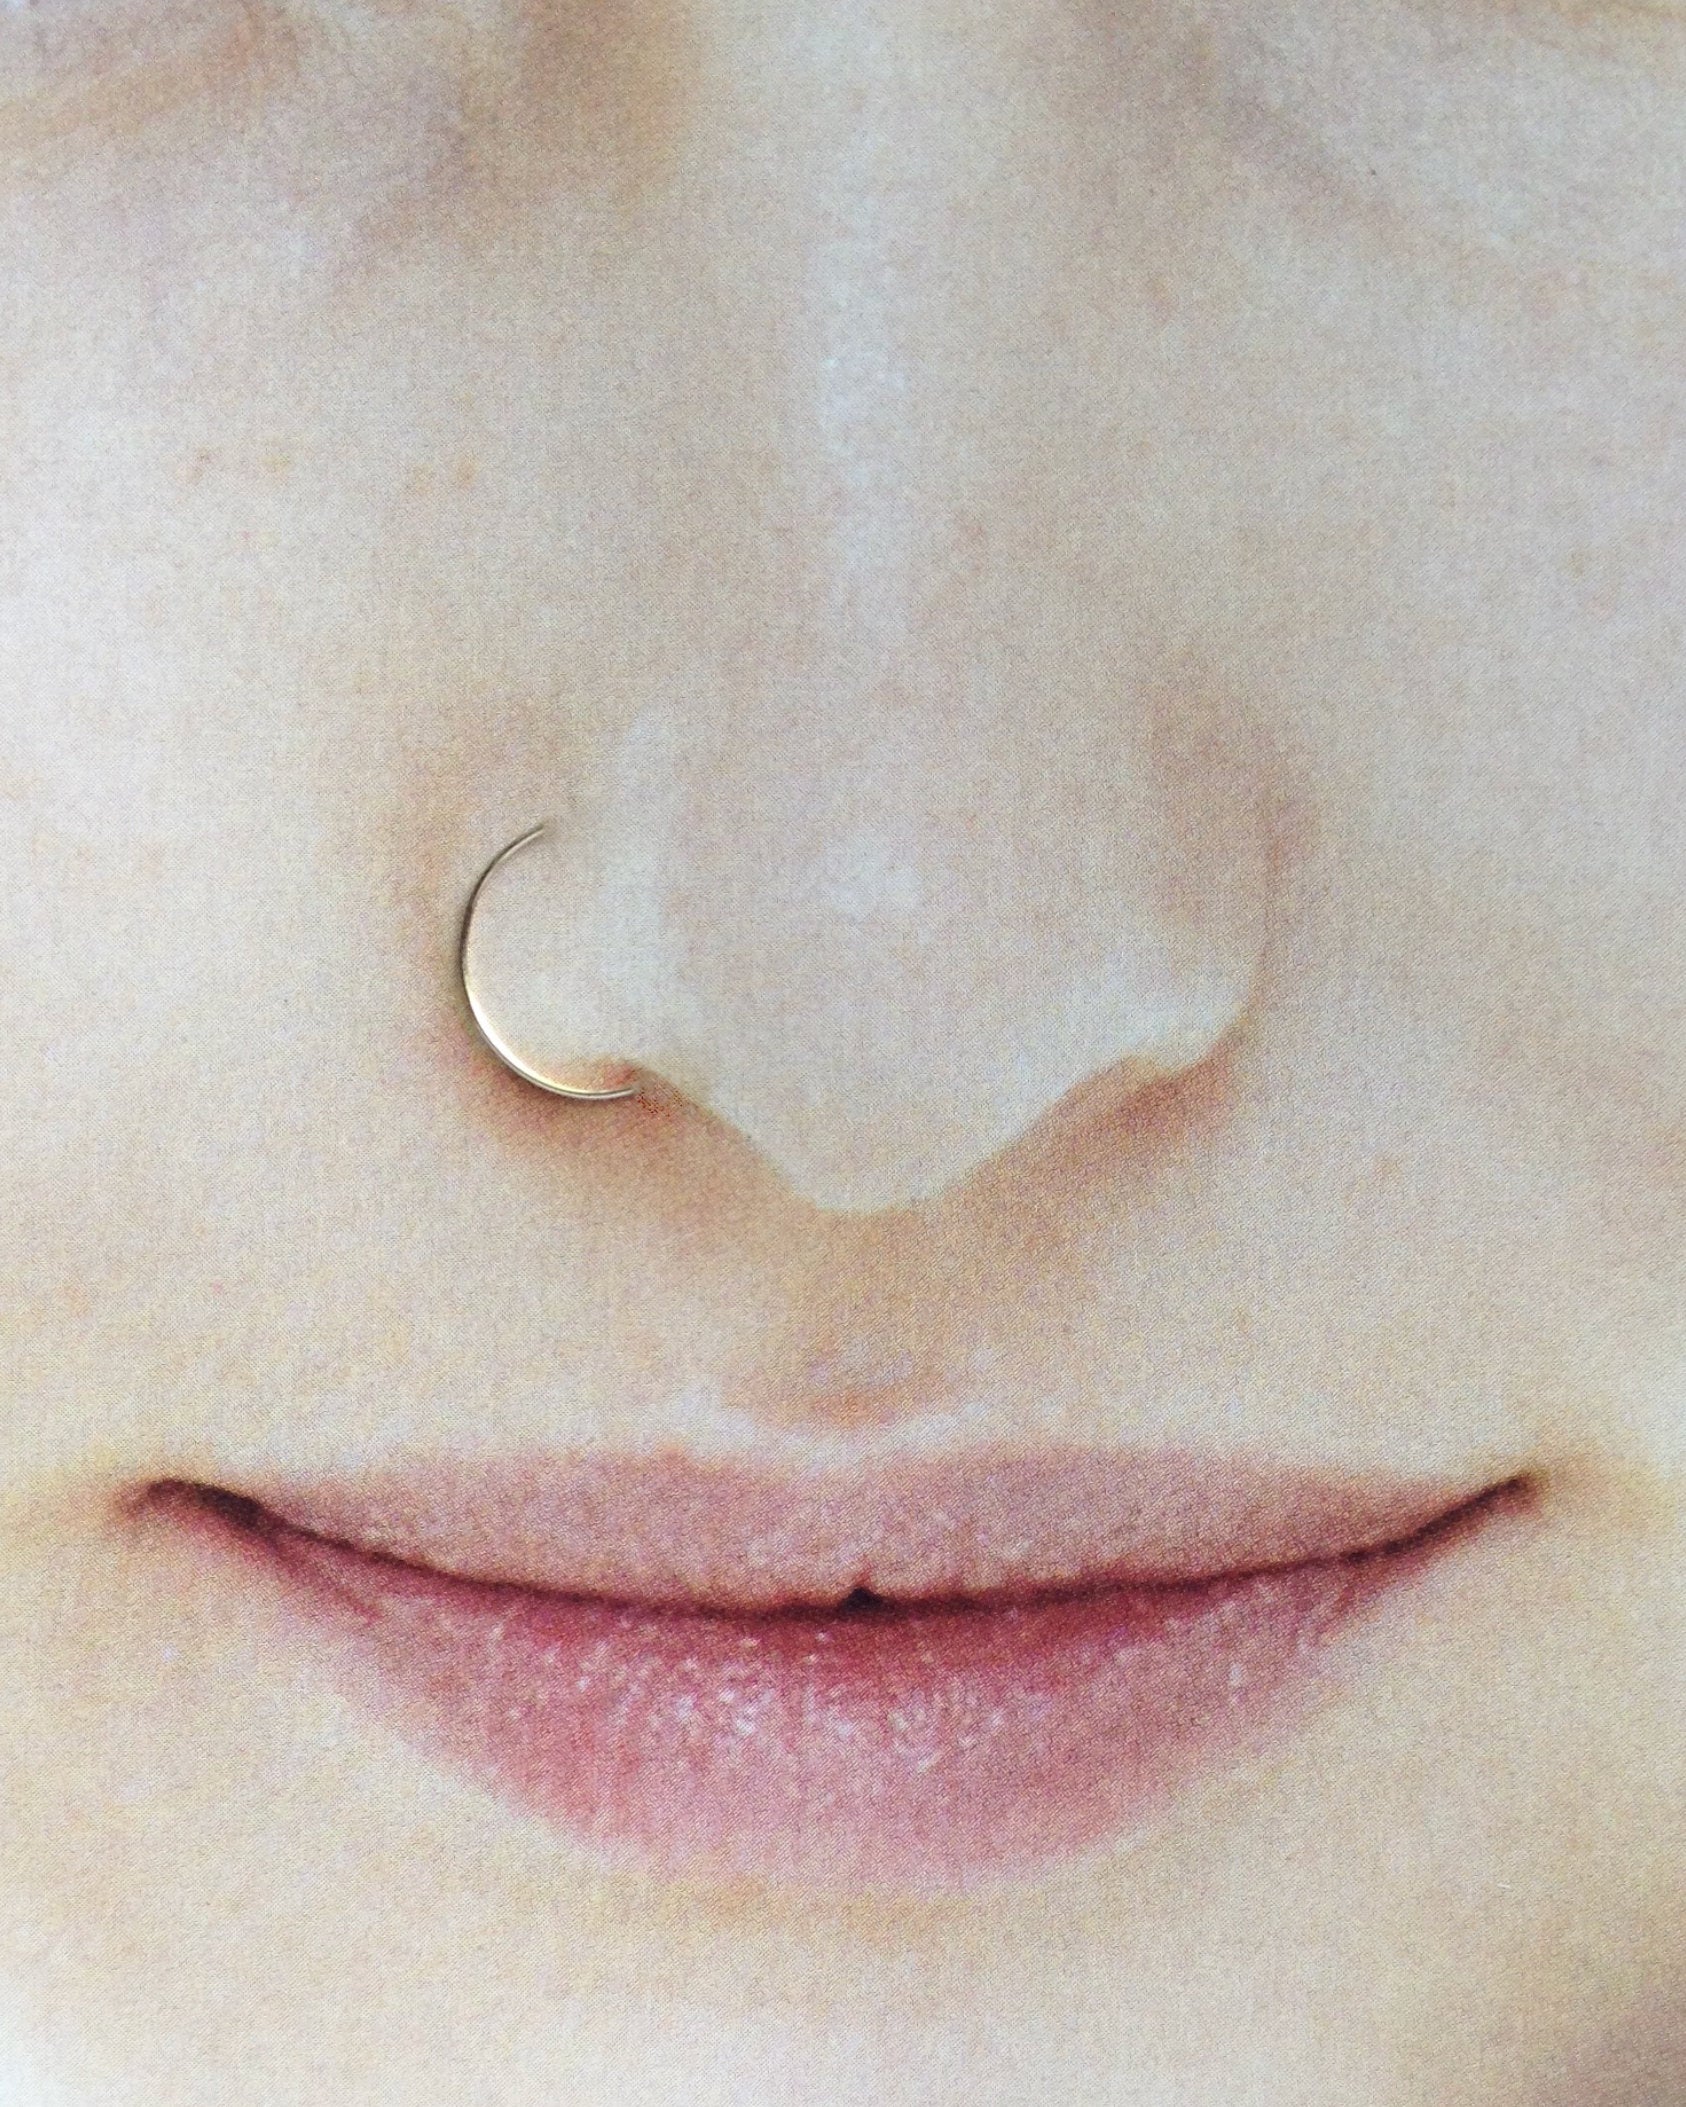 Snug Nose Hoop | 6mm 7mm 8mm 9mm Small Nose Hoop | Thin Dainty Nose Hoop | IB Jewelry